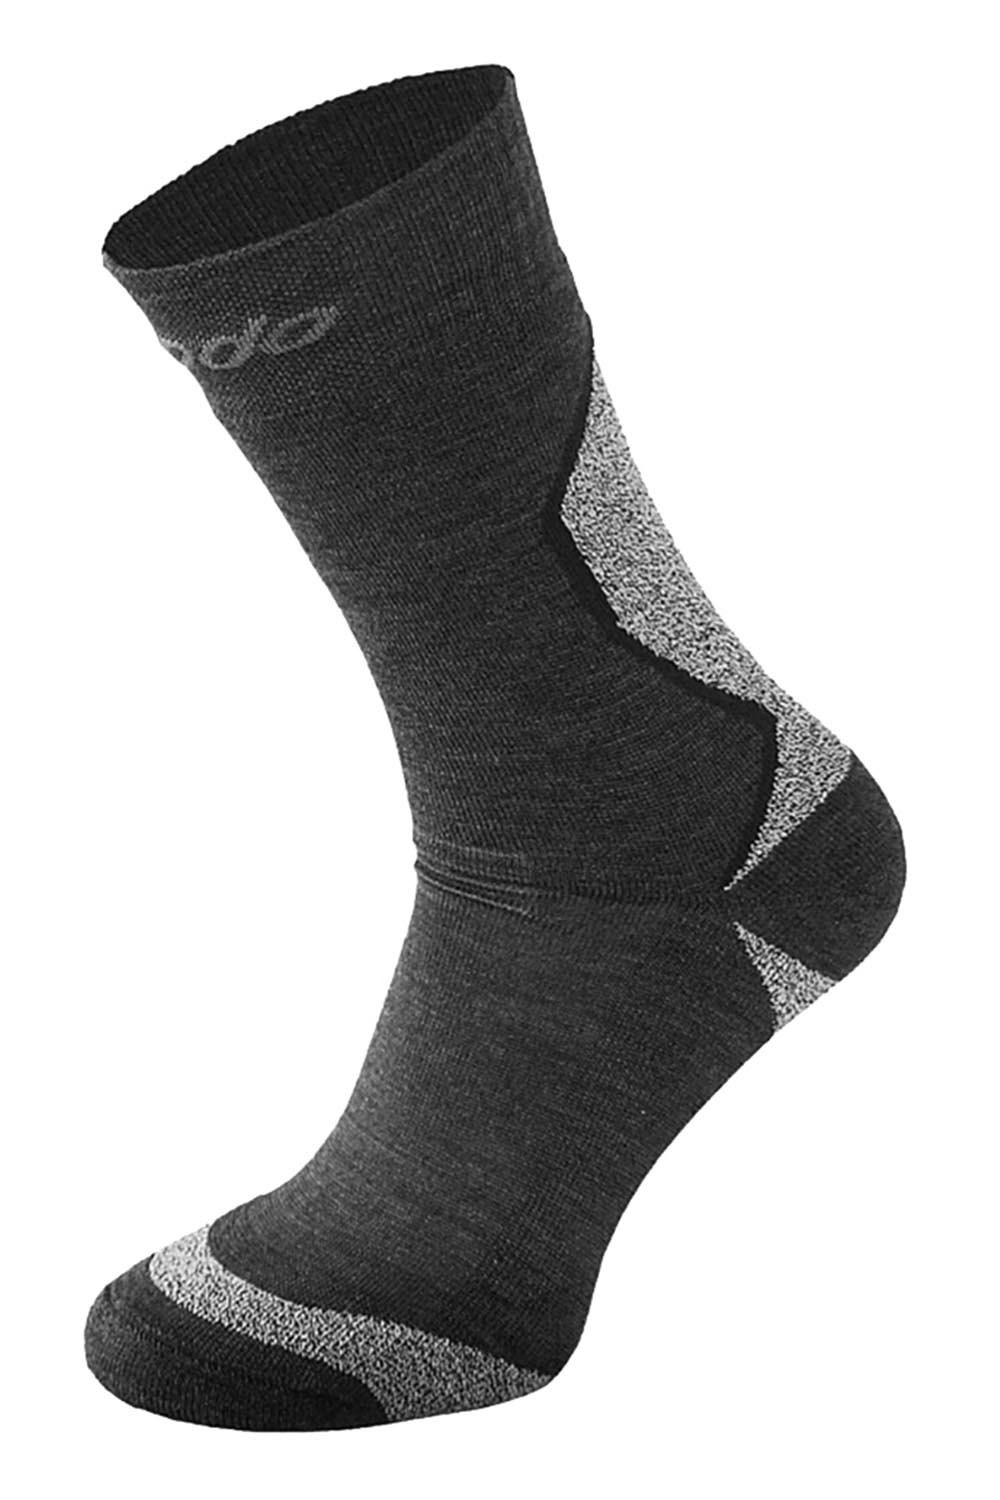 Merino Wool Hiking Thermal Socks -